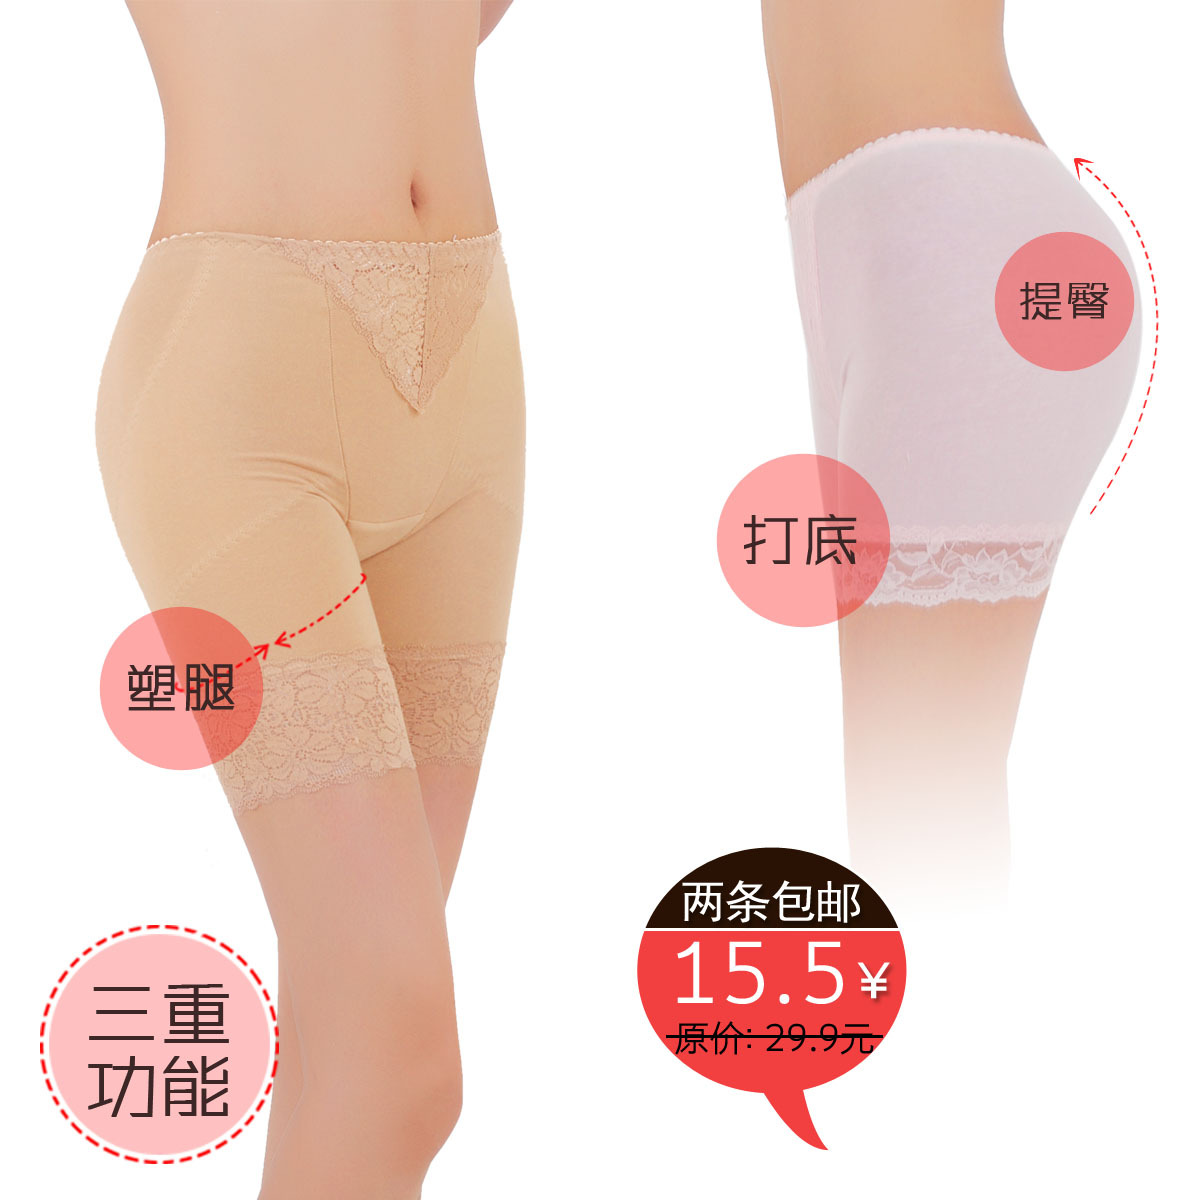 free shipping Safety pants lace seamless female 100% cotton pants legging shorts knee-length pants